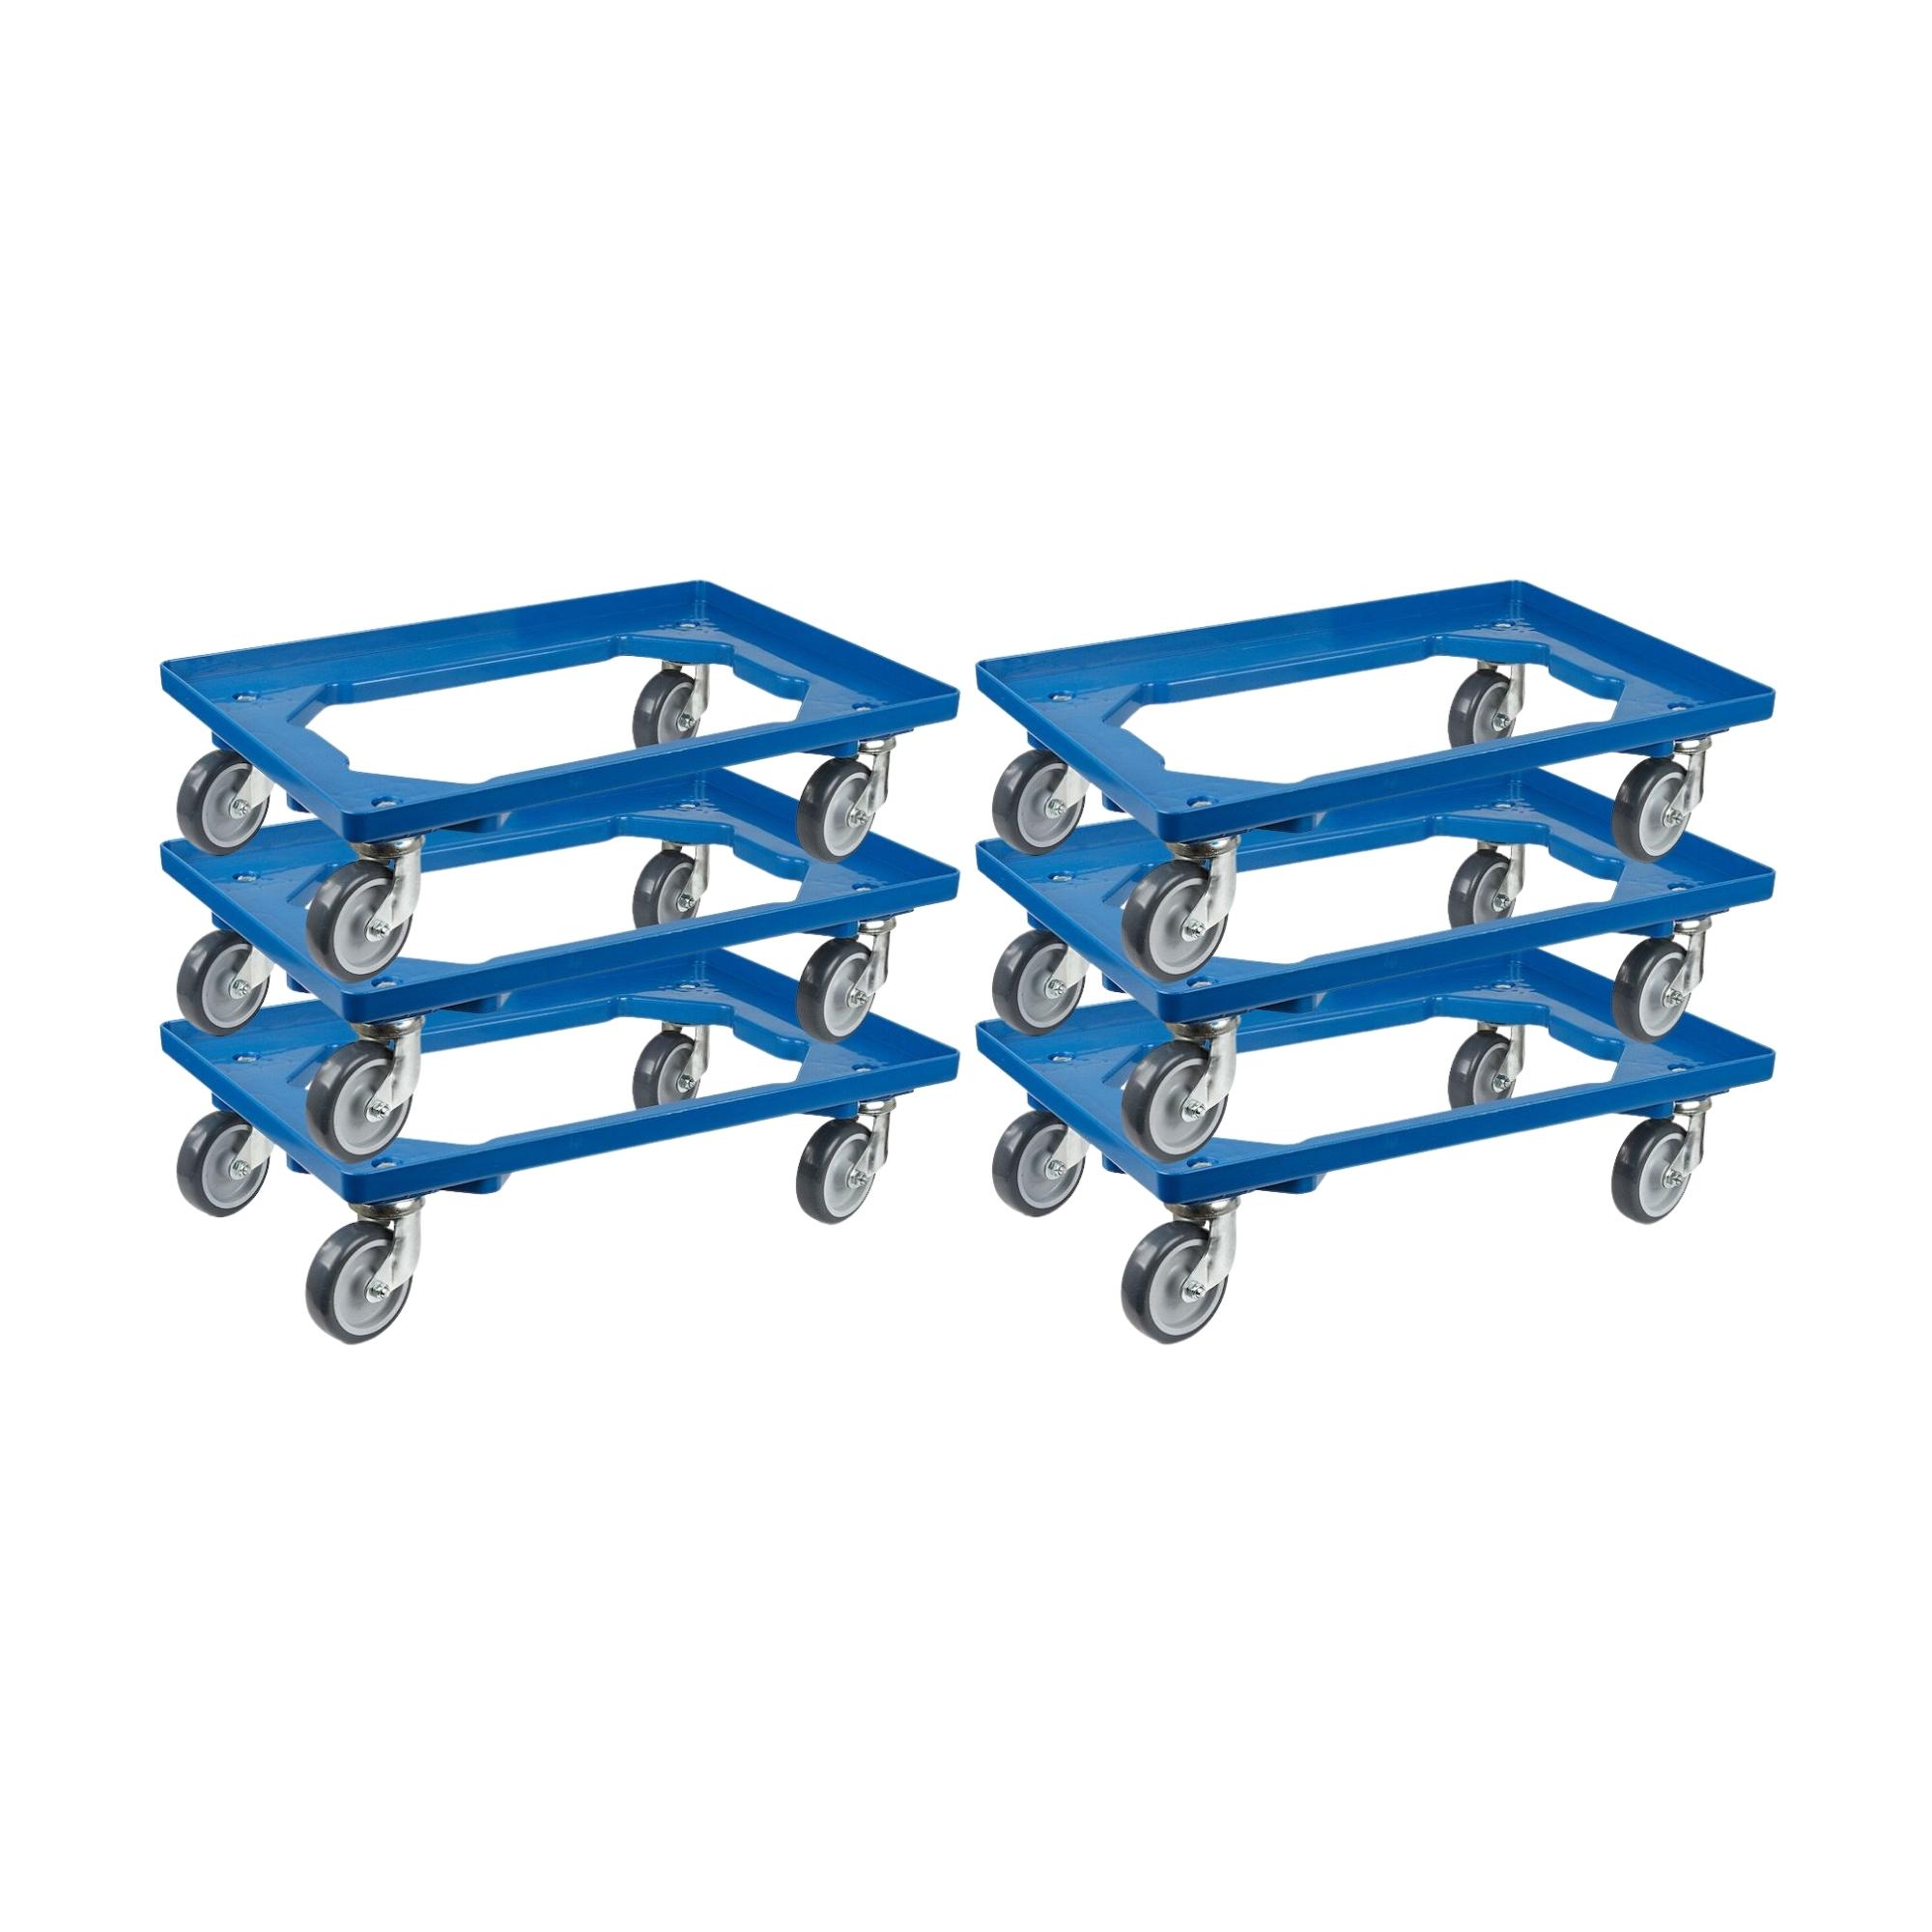 Transportroller für Euroboxen 60x40cm mit Gummiräder blau | Offenes Deck | 2 Lenkrollen & 2 Bremsrollen | Traglast 300kg | Kistenroller Logistikroller Rollwagen Profi-Fahrgestell